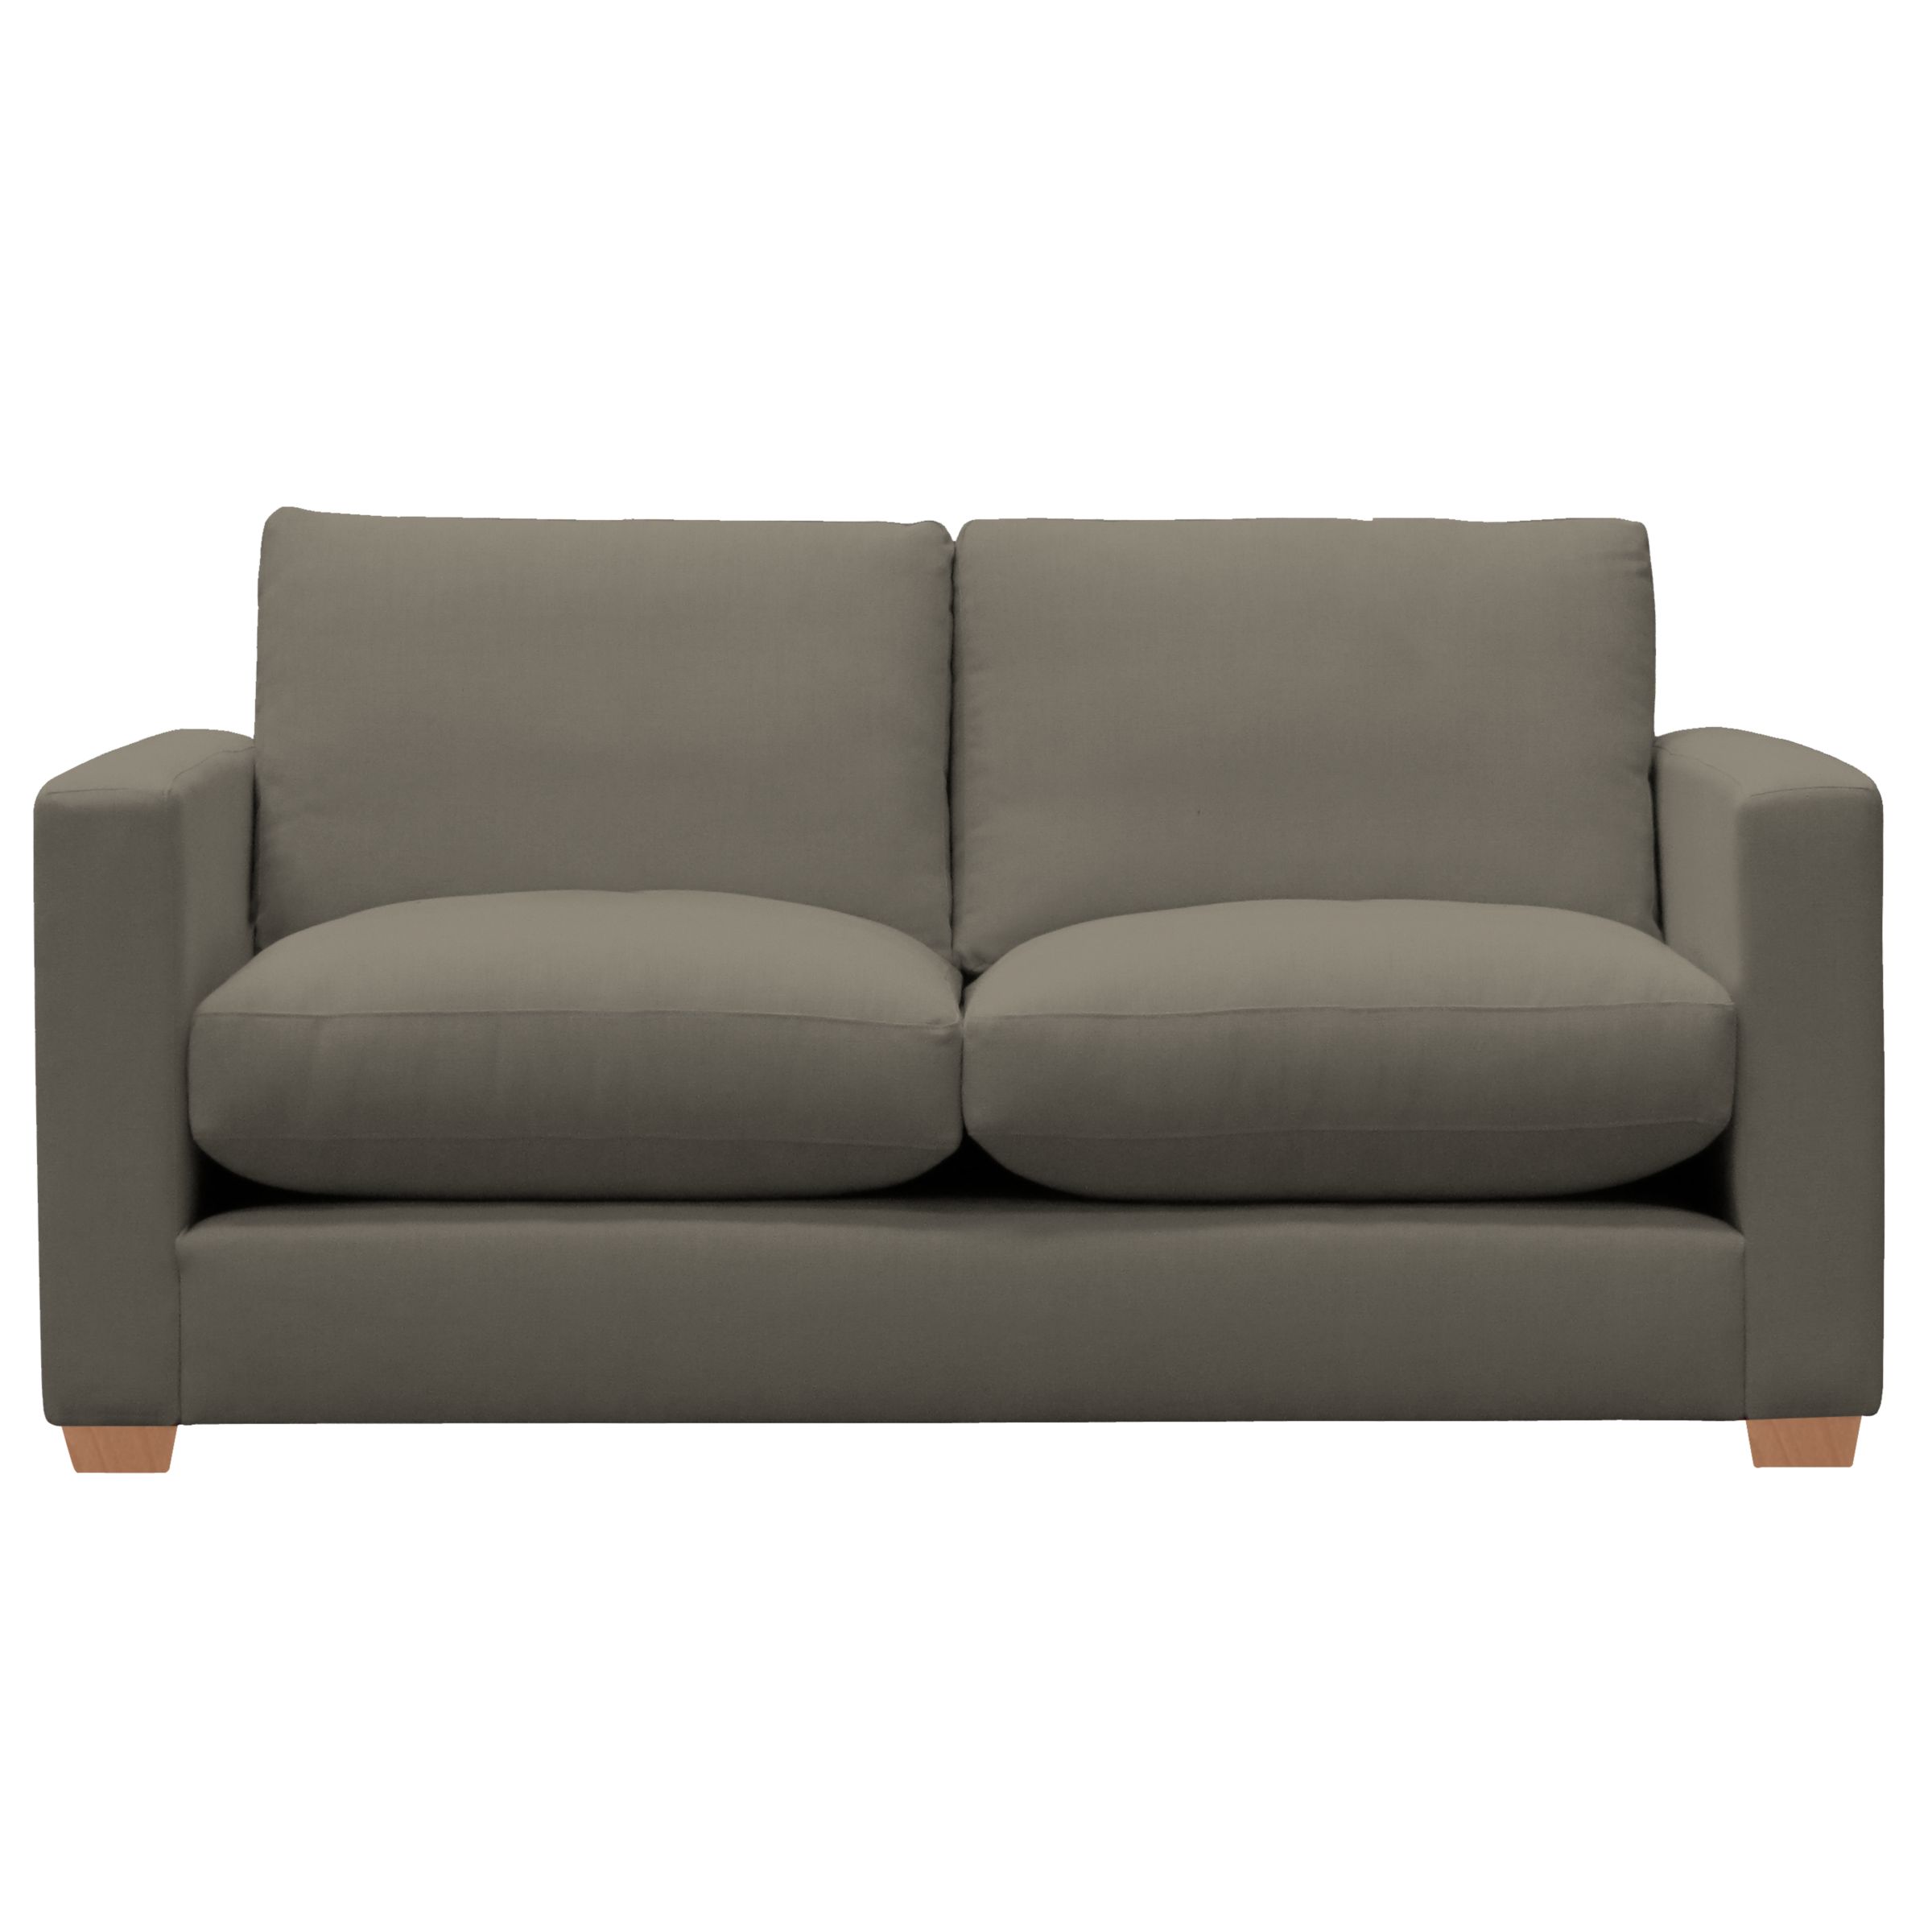 John Lewis Options Slim Arm Medium Sofa, Linley Slate, width 170cm